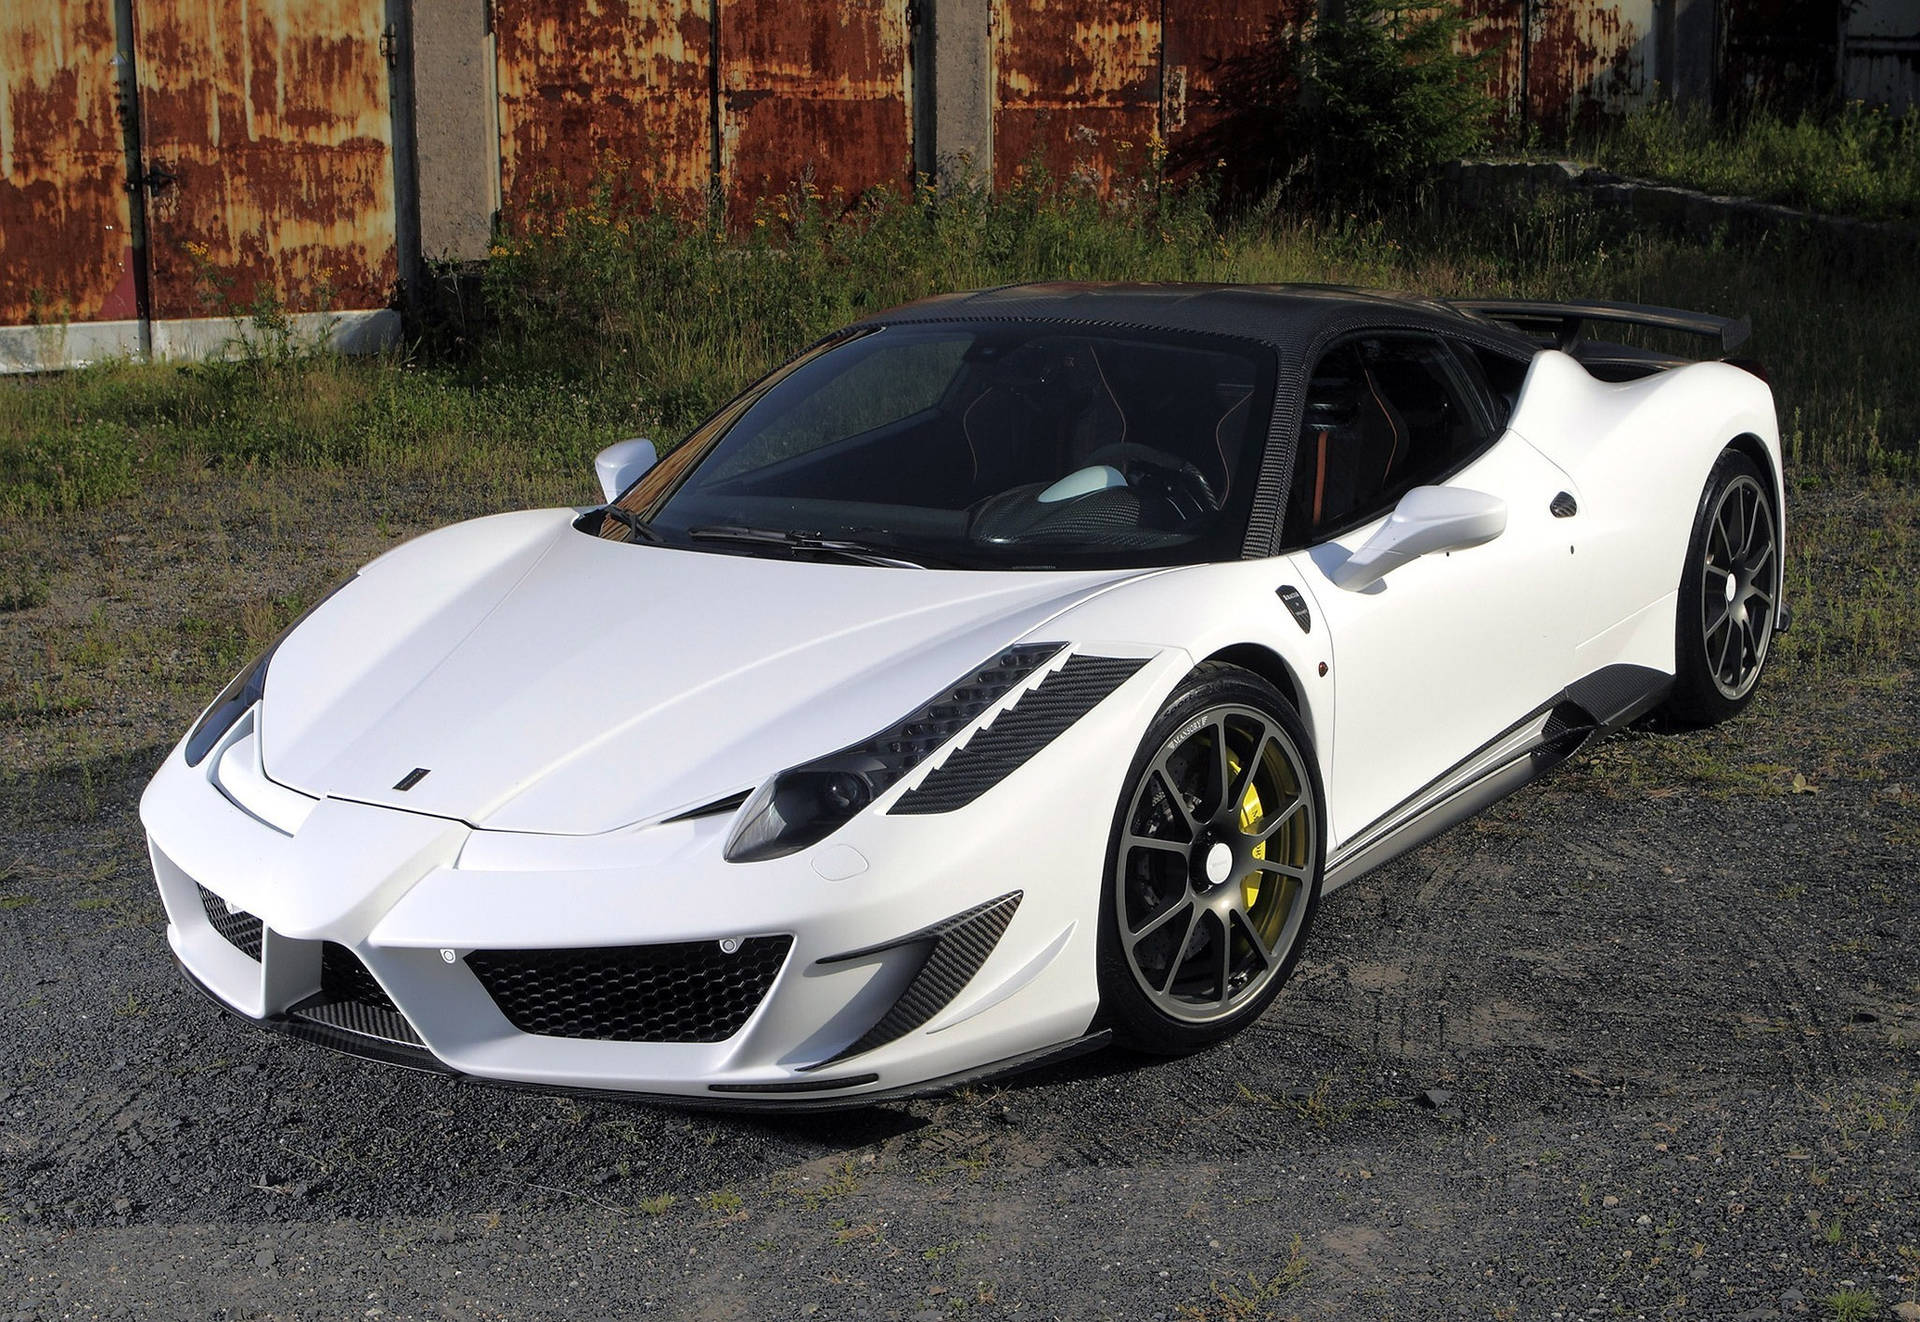 Amazing White Ferrari Car